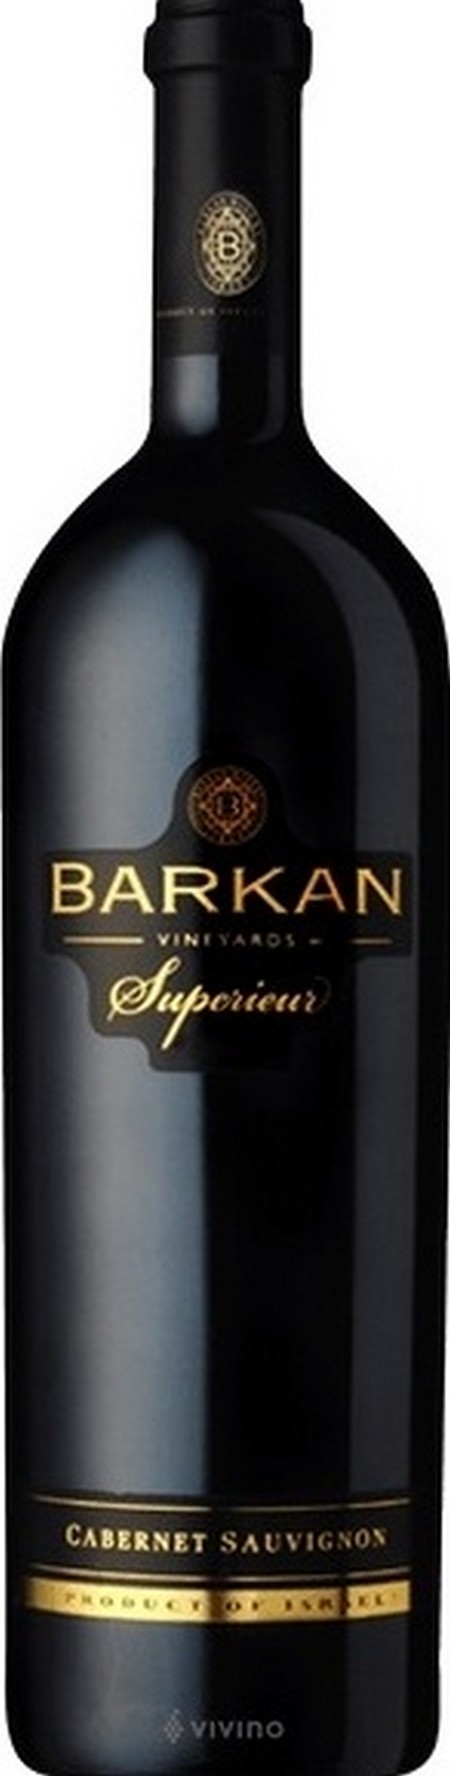 barkan-superieur-2016